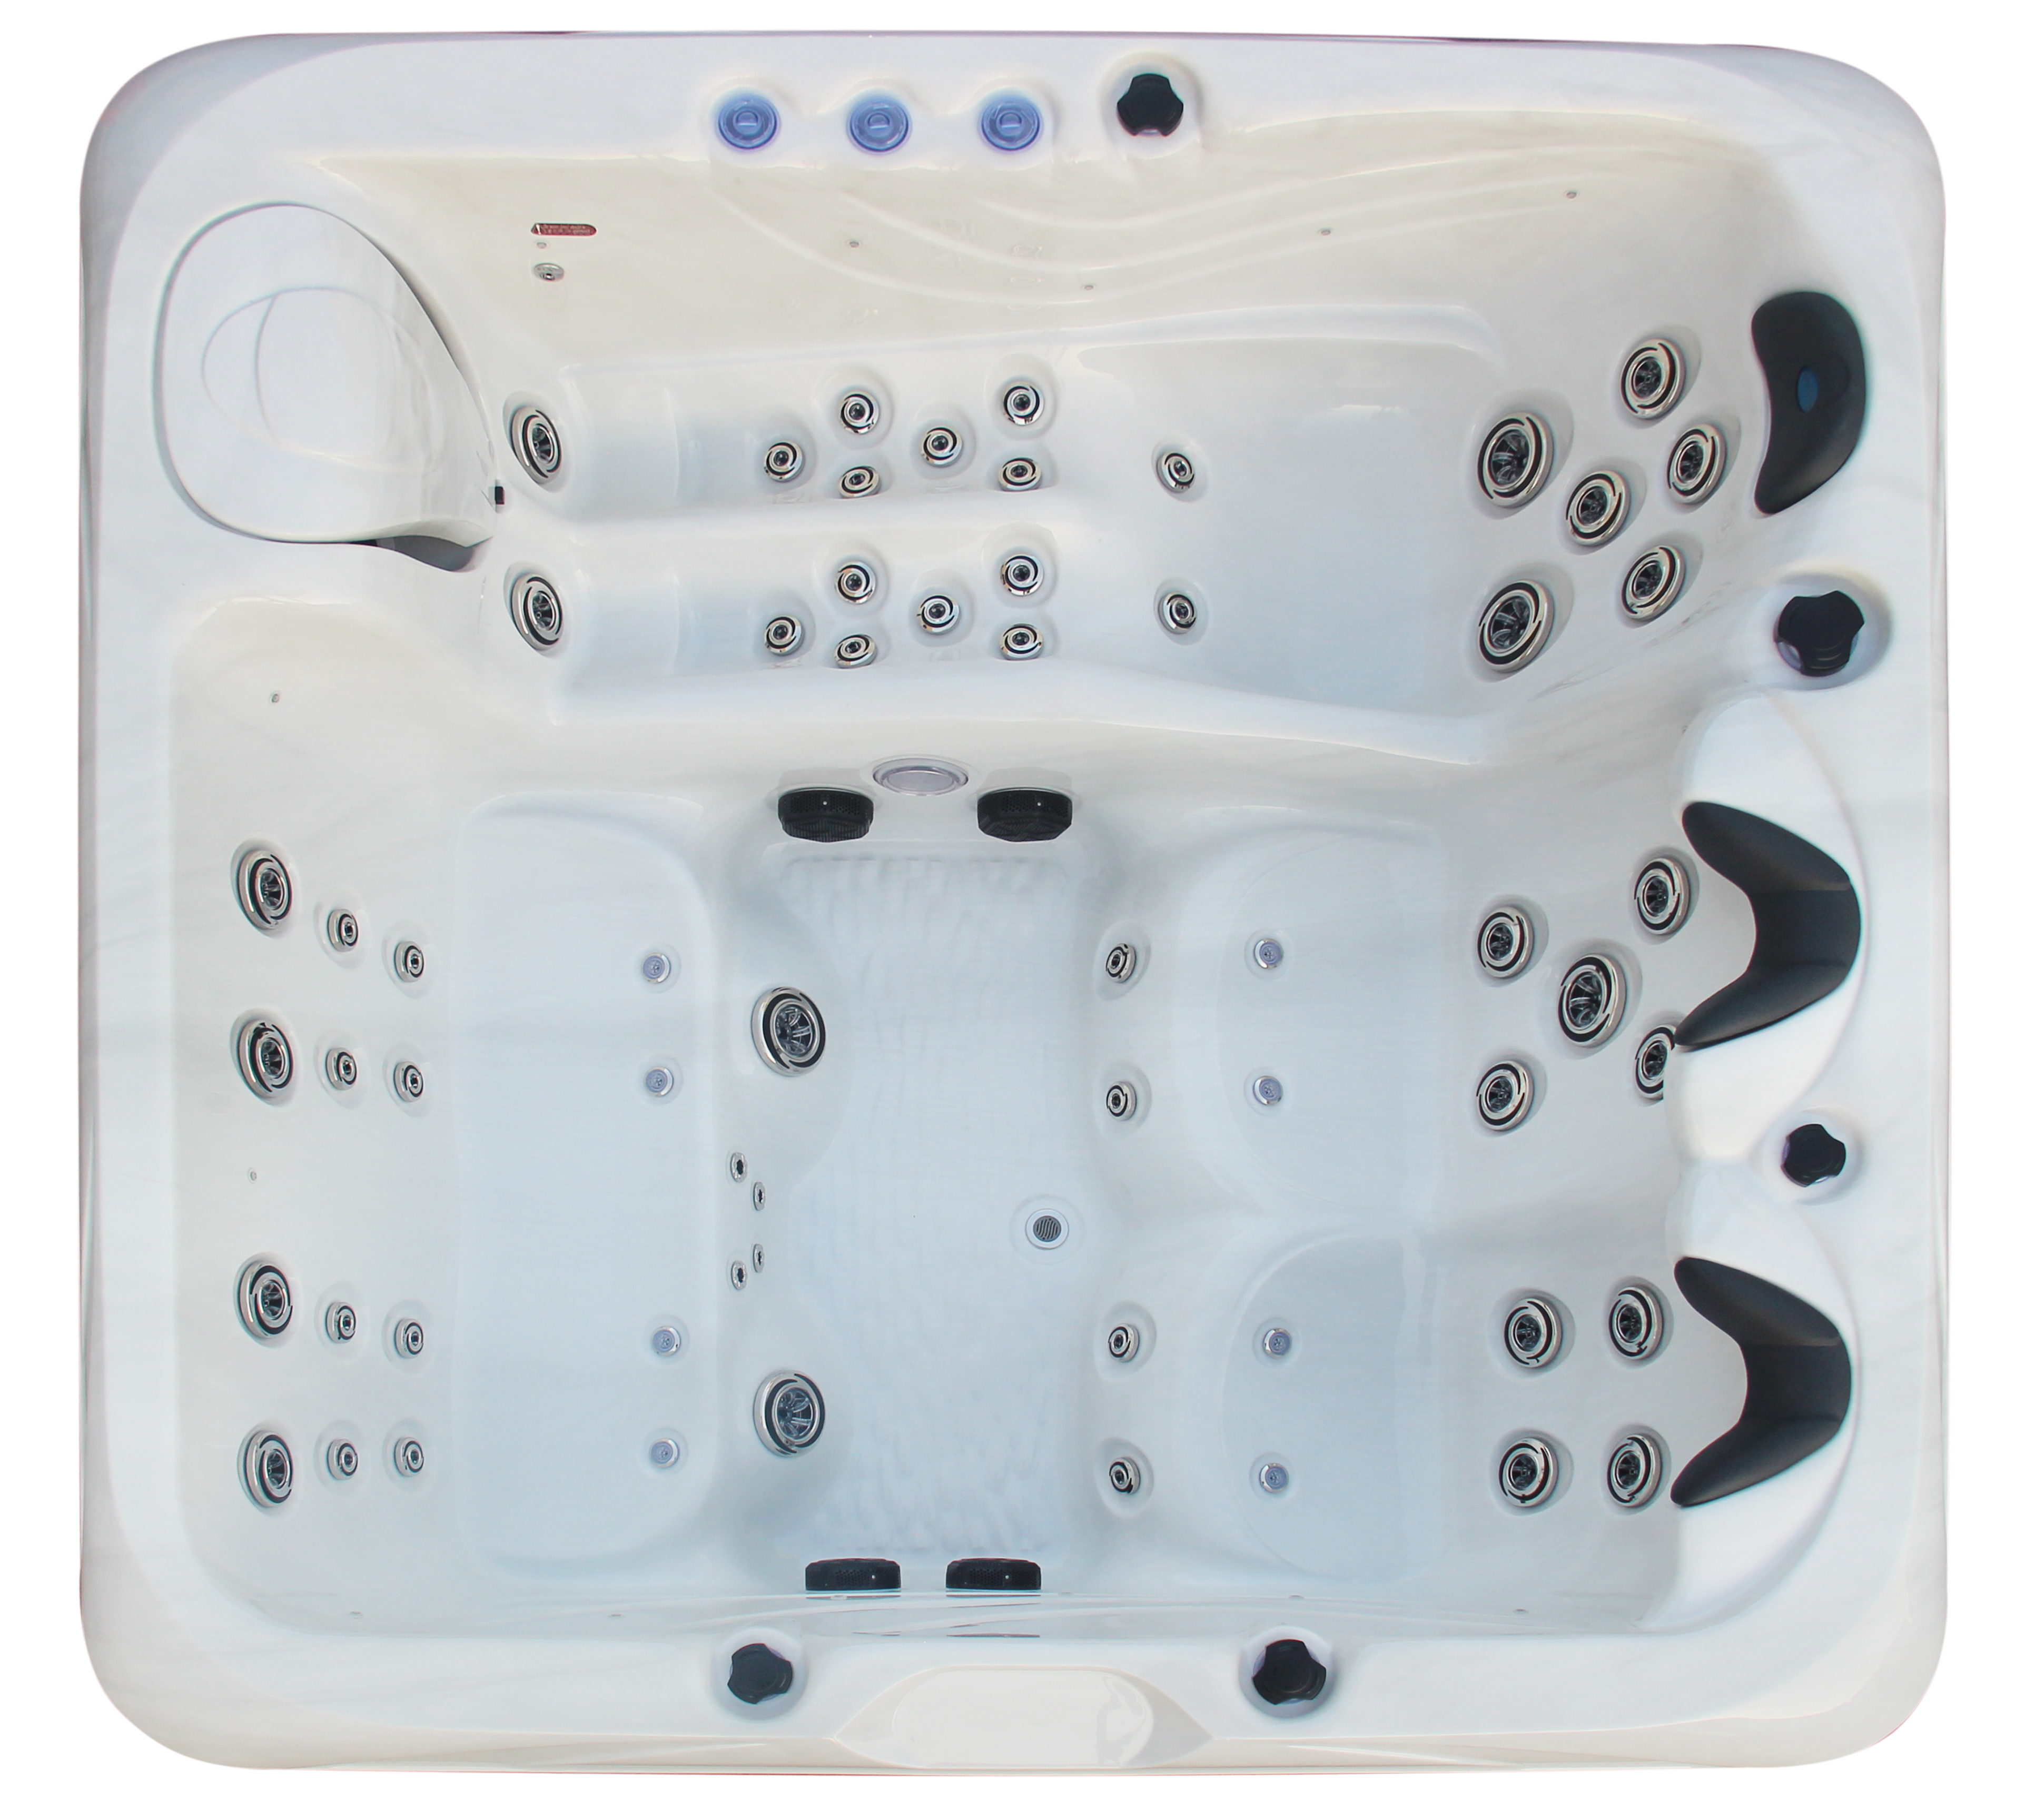 HL-2205 hot tub spa